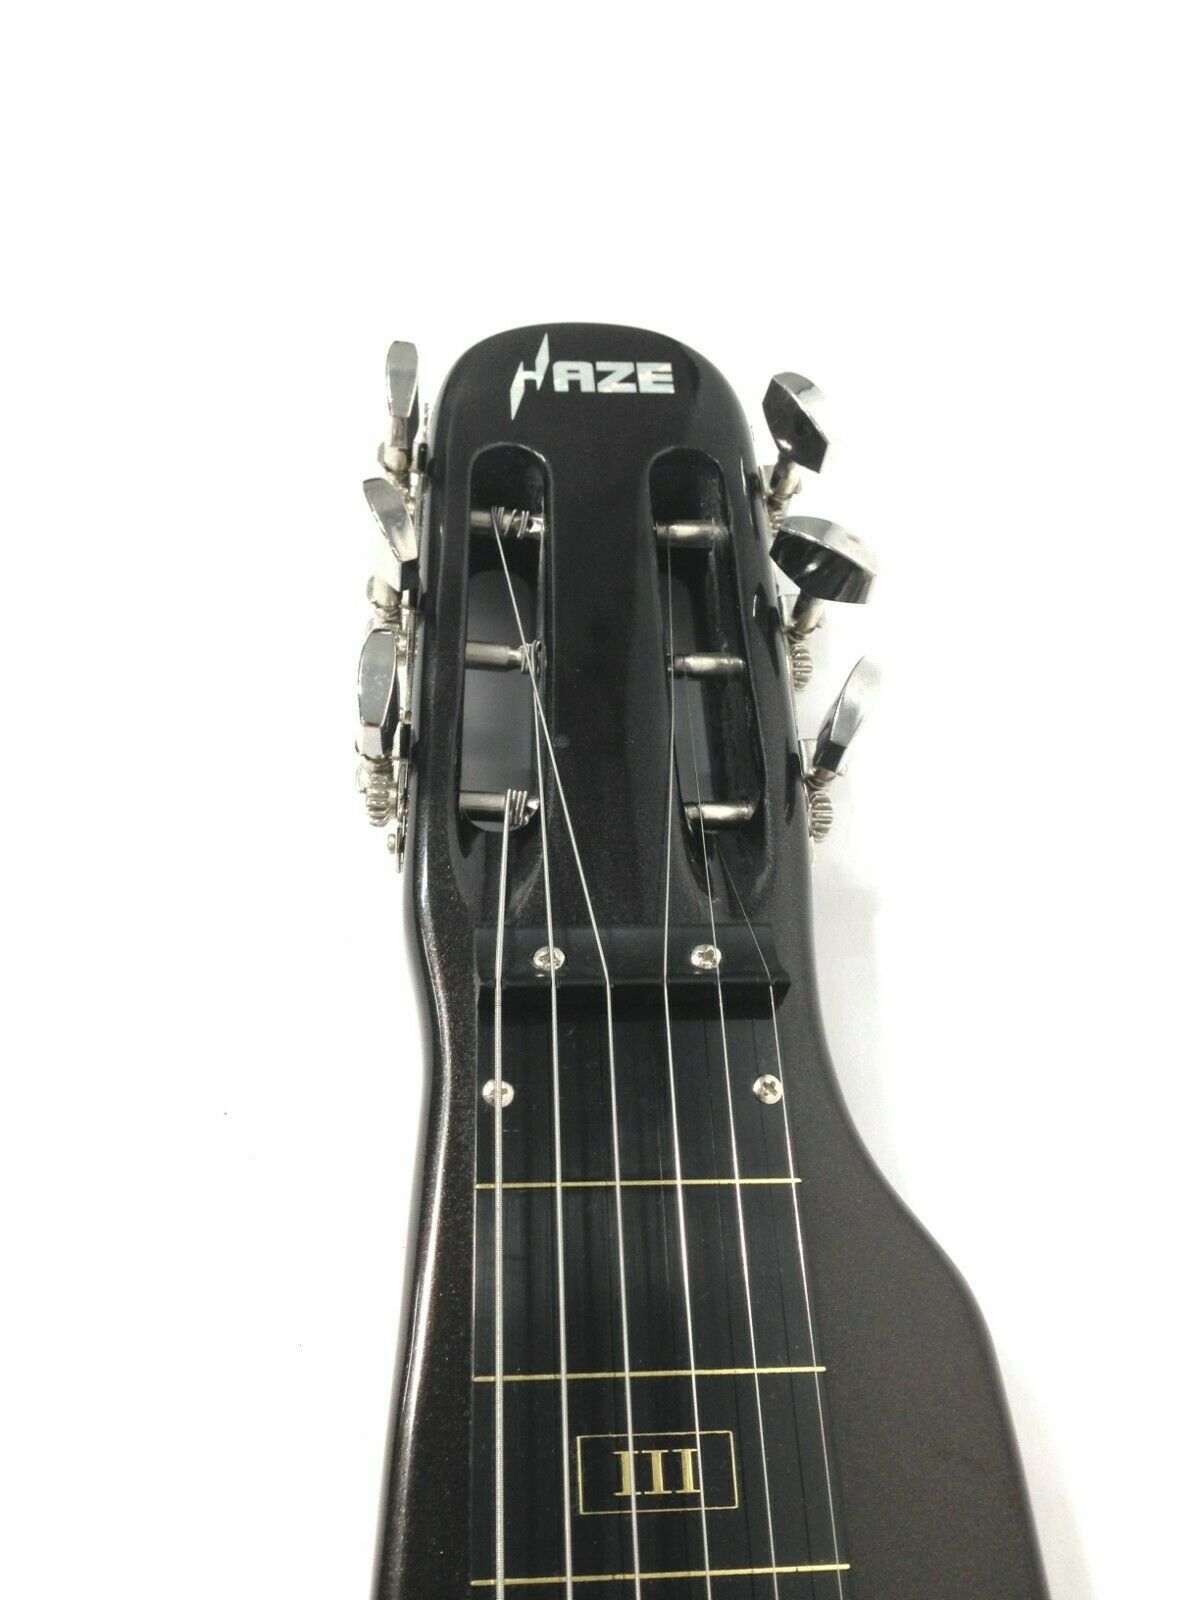 Haze Lap Steel Single Coil Height Adjustable Lap Steel Electric Guitar - Black HSLT1930MBK